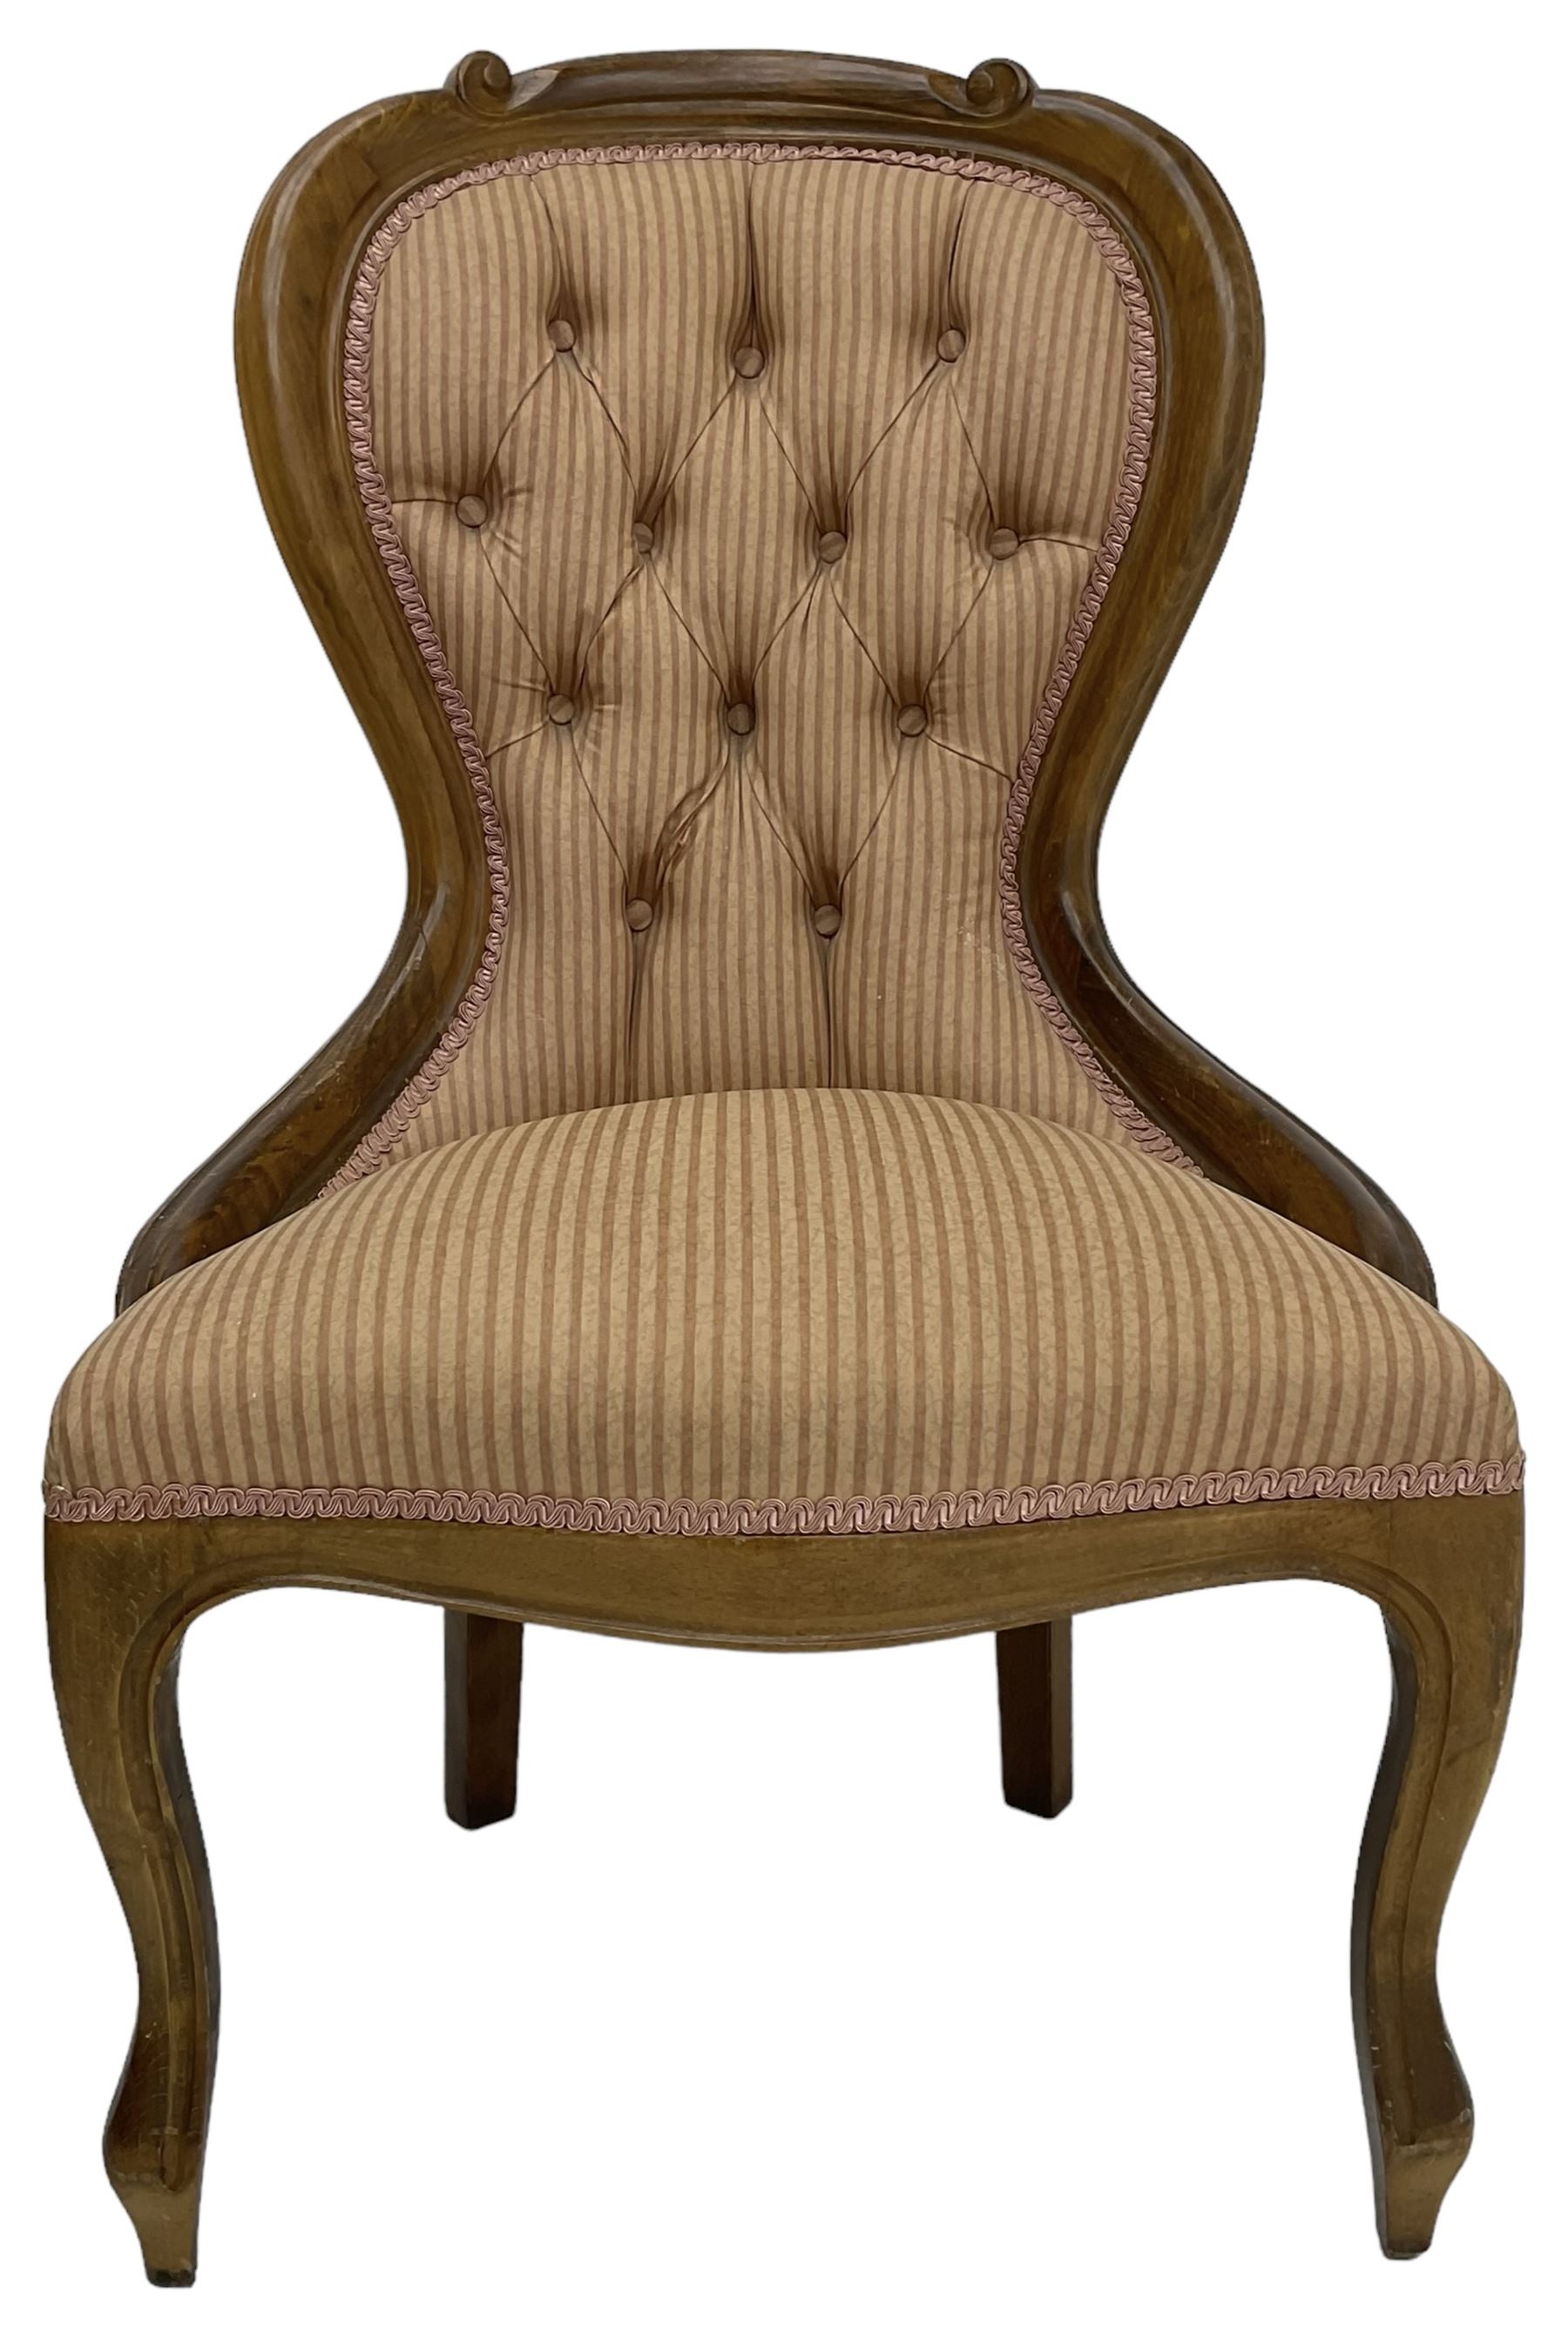 Victorian design beech framed nursing chair - Image 2 of 2